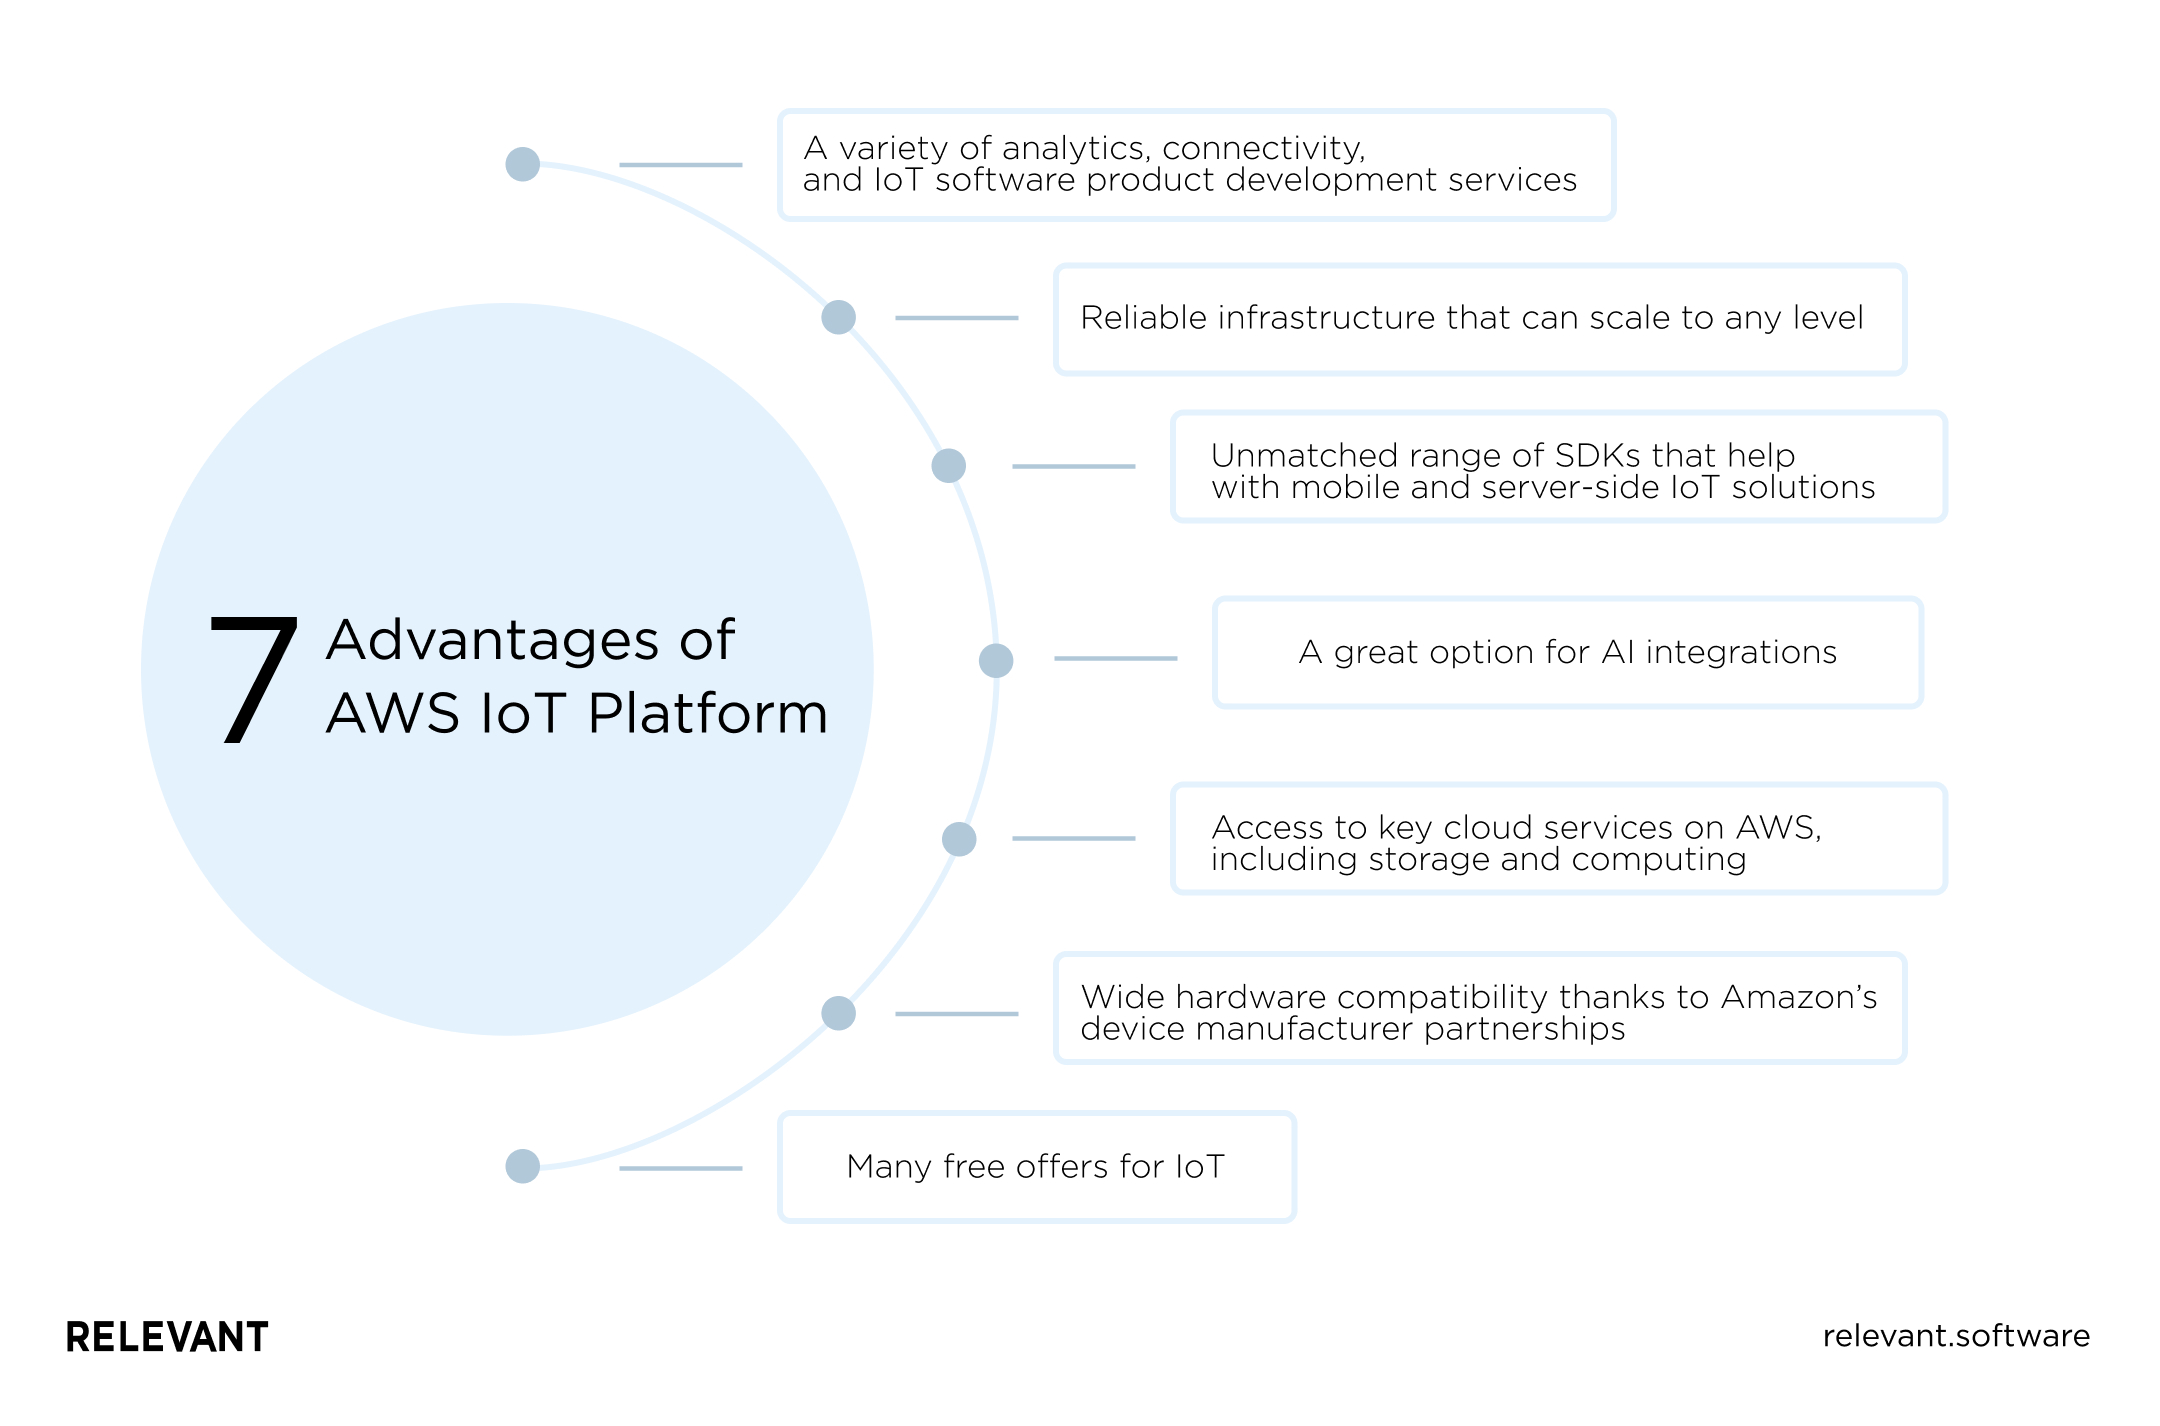  7 Advantages of AWS IoT Platform